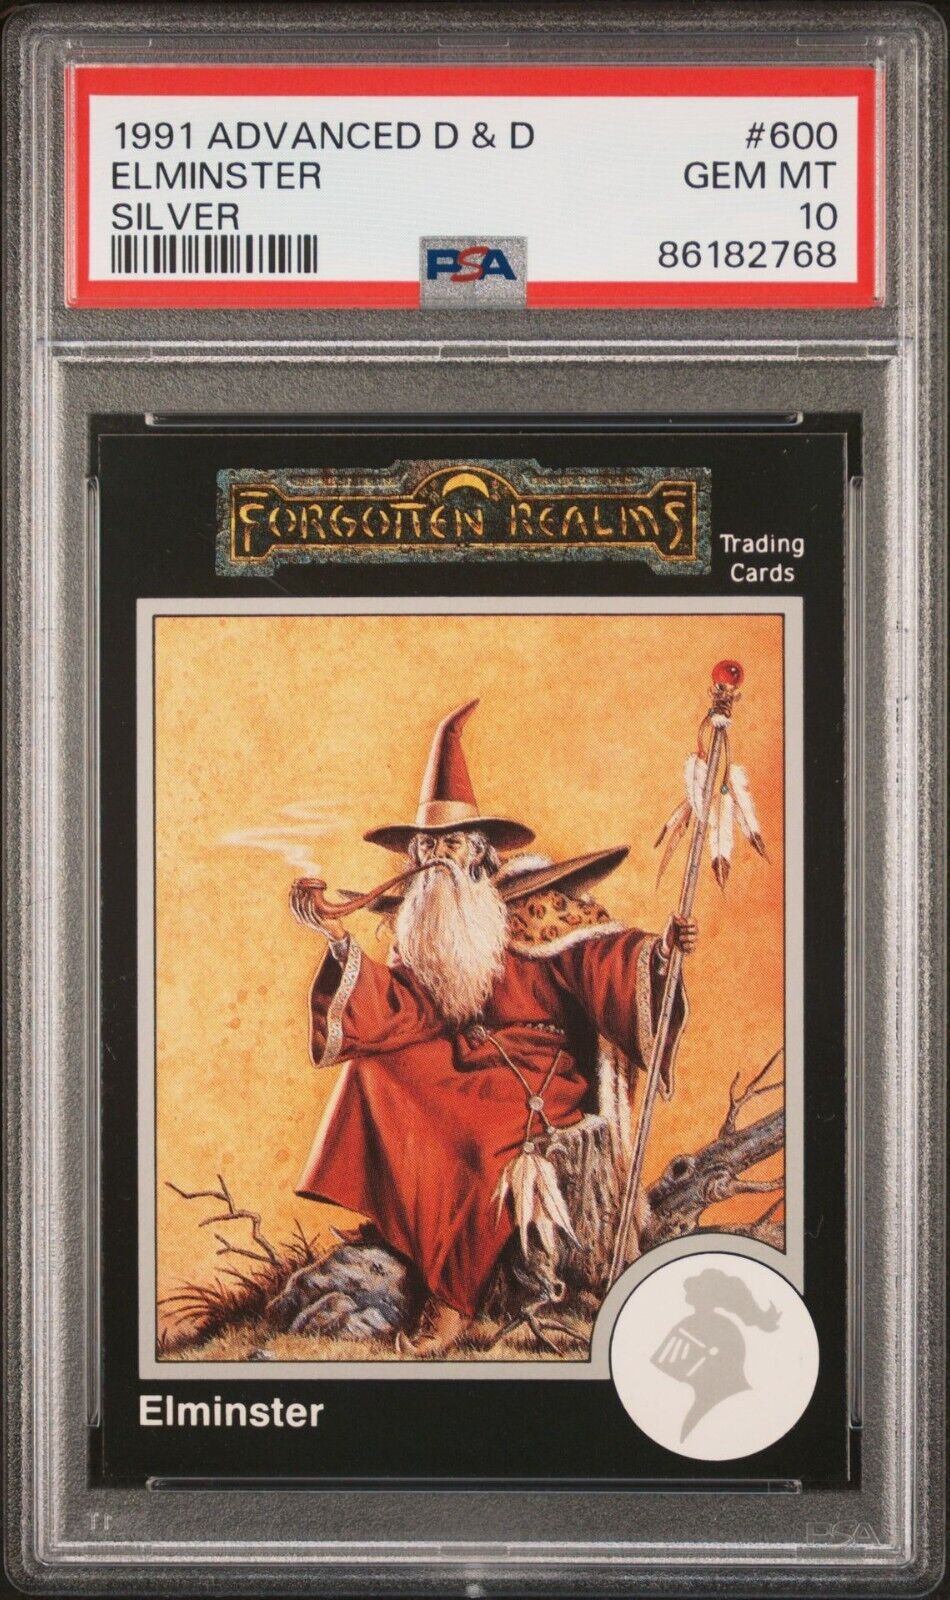 1991 Advanced Dungeons & Dragons Trading Cards Silver - Elminster - PSA 10 GEM